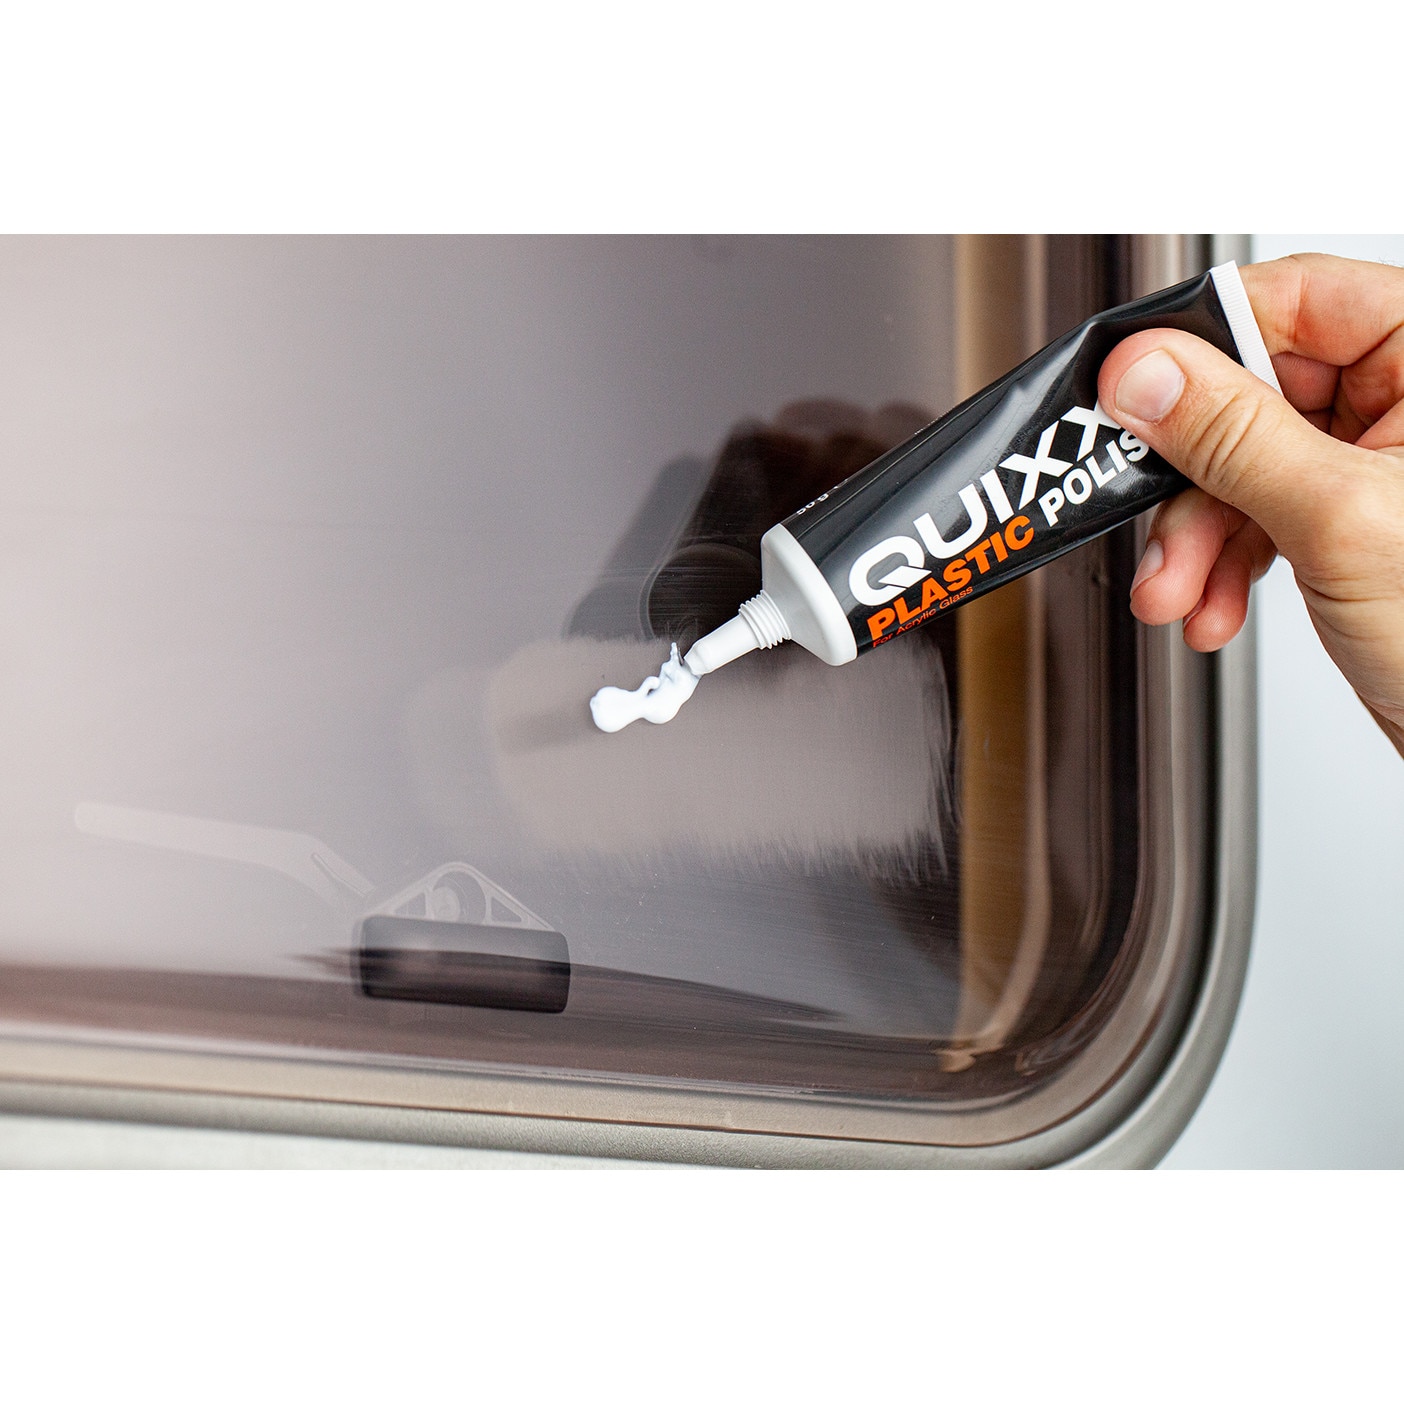 Quixx Acrylic Scratch Remover Kit - 10141 - Pro Detailing